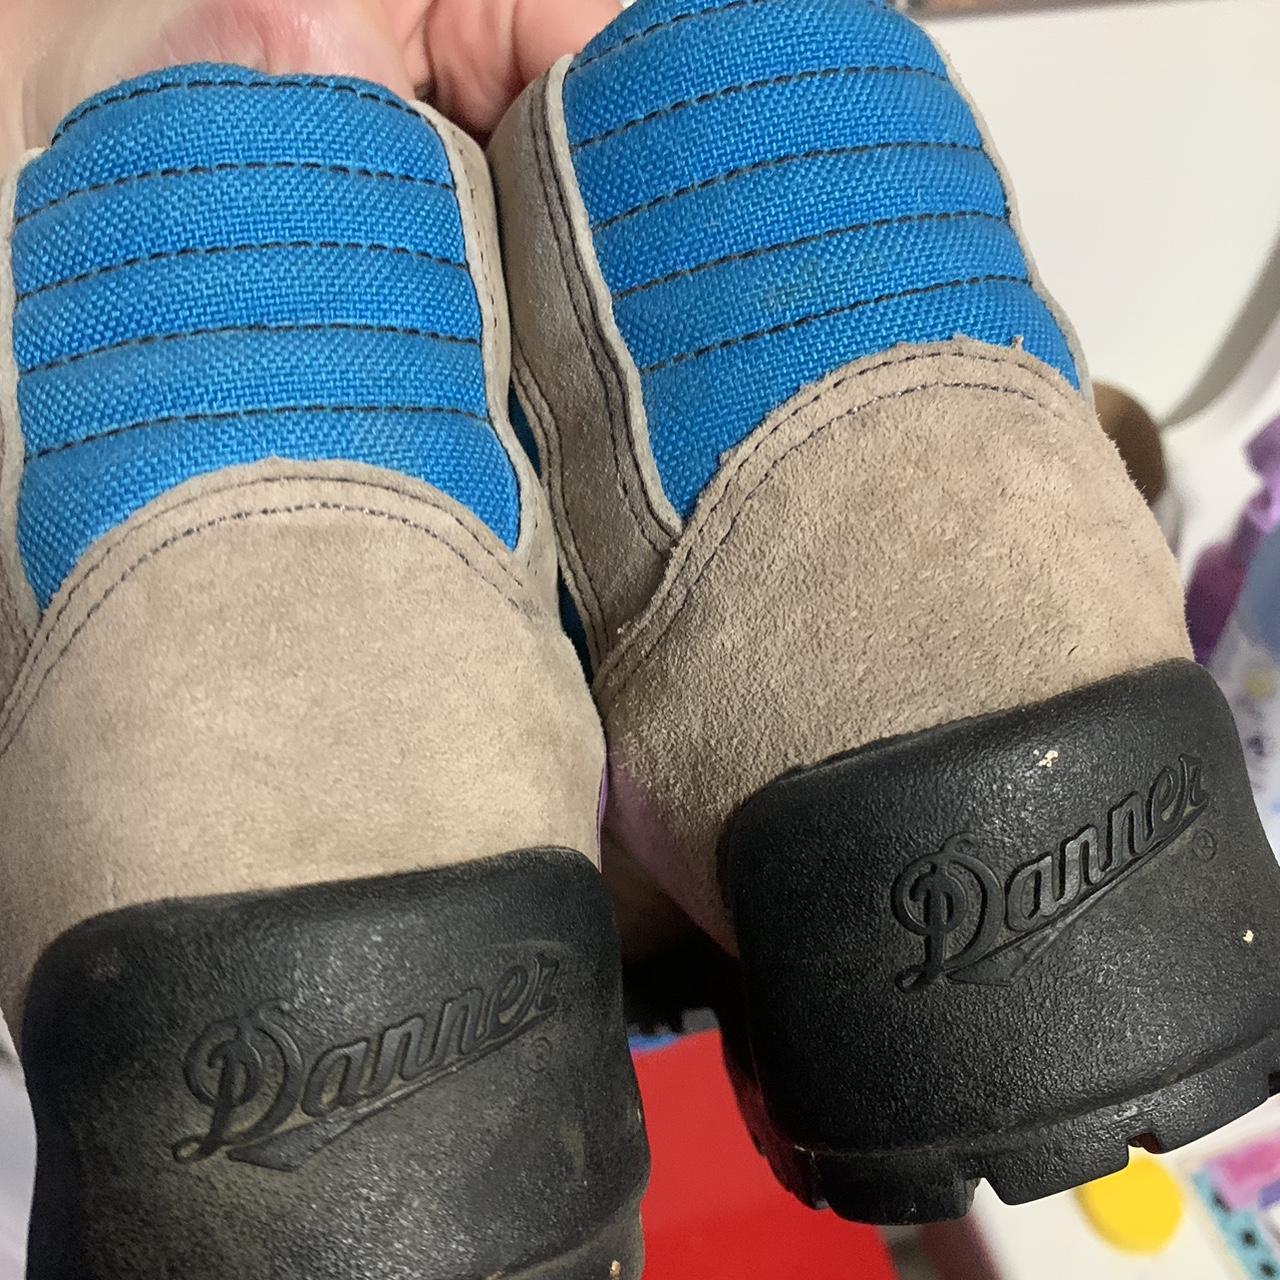 Danner Women's Blue and Grey Boots | Depop